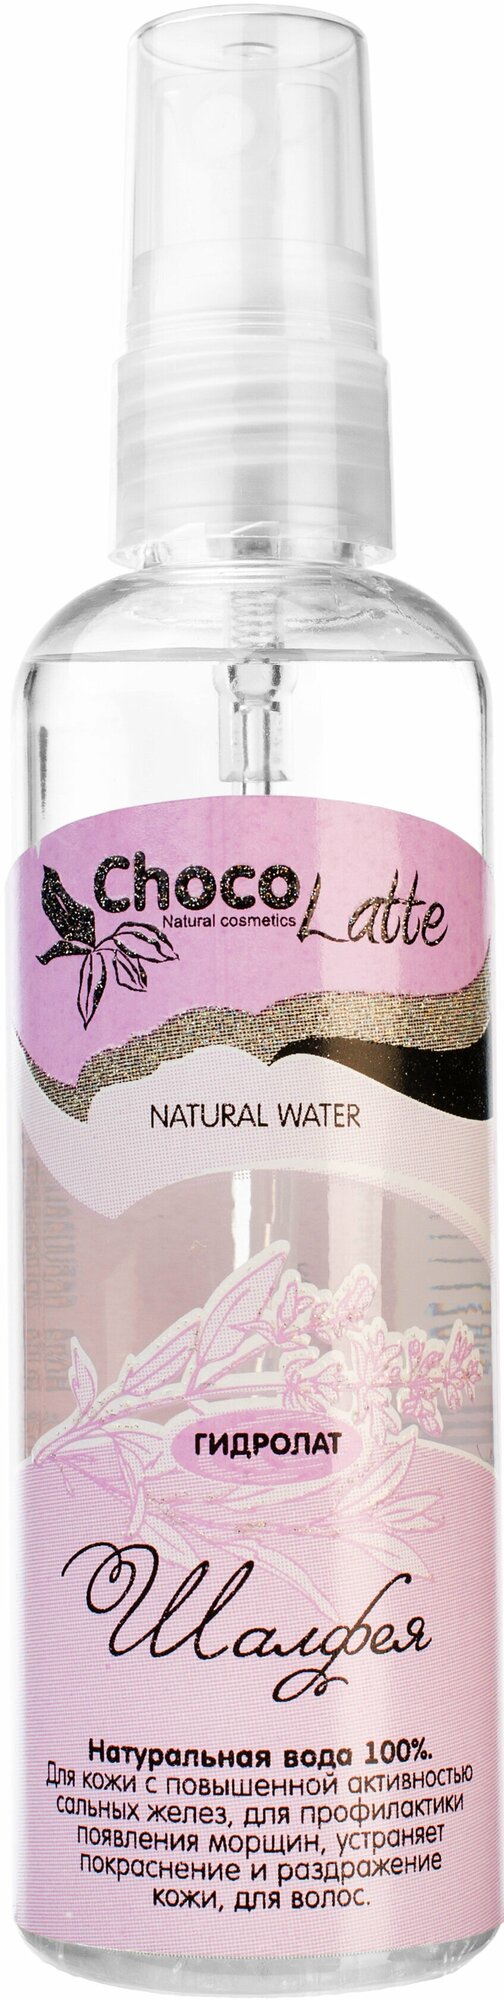 ChocoLatte Натуральная цветочная вода шалфея 100% гидролат, 100ml